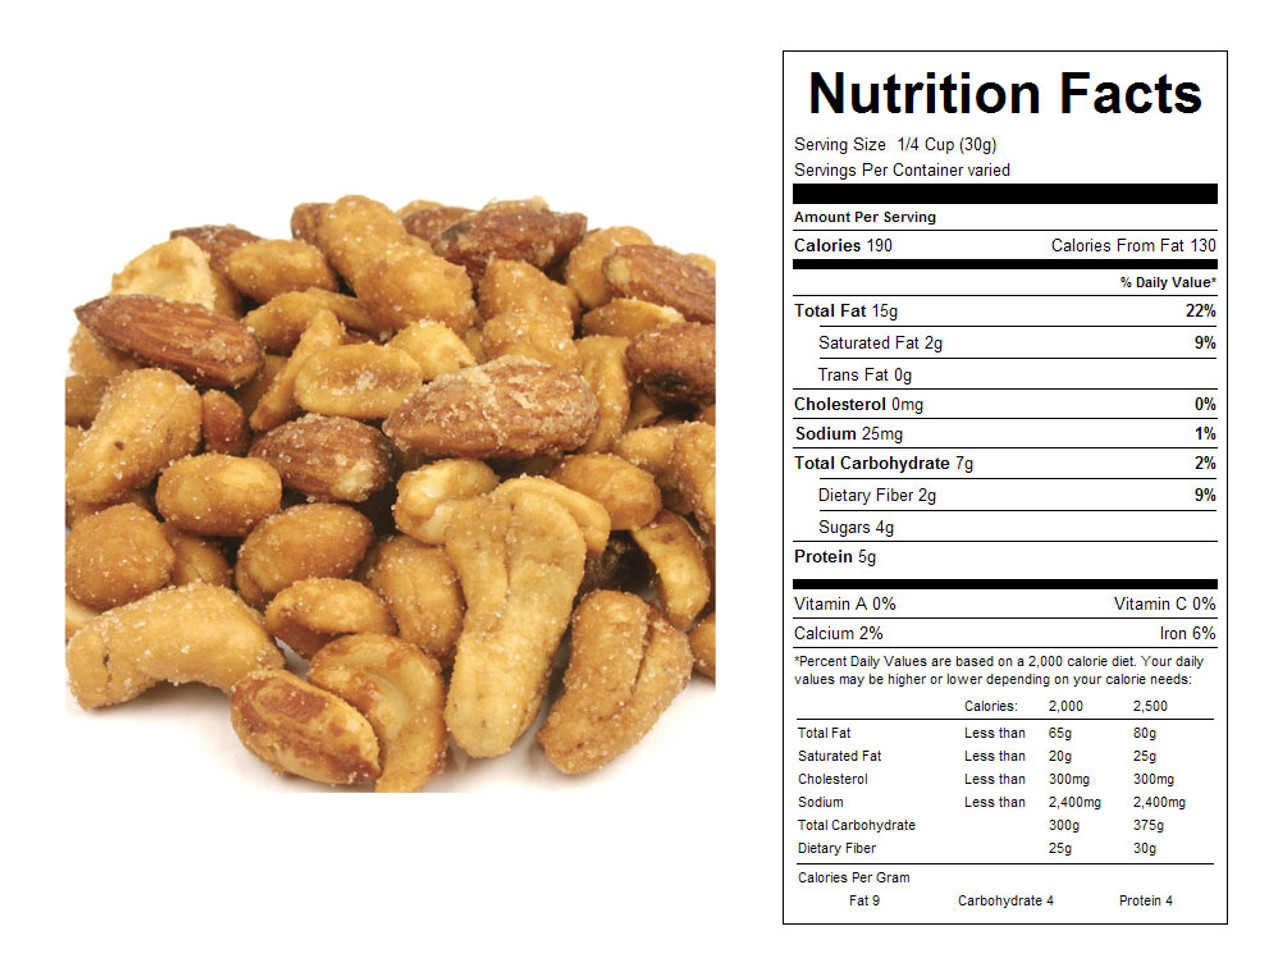 https://cdn11.bigcommerce.com/s-xun5w23utl/images/stencil/1280x1280/products/5283/8858/honey-roasted-peanut-cashew-almond-bulk-nut-mix-nutrition-facts__01633.1607806999.jpg?c=1